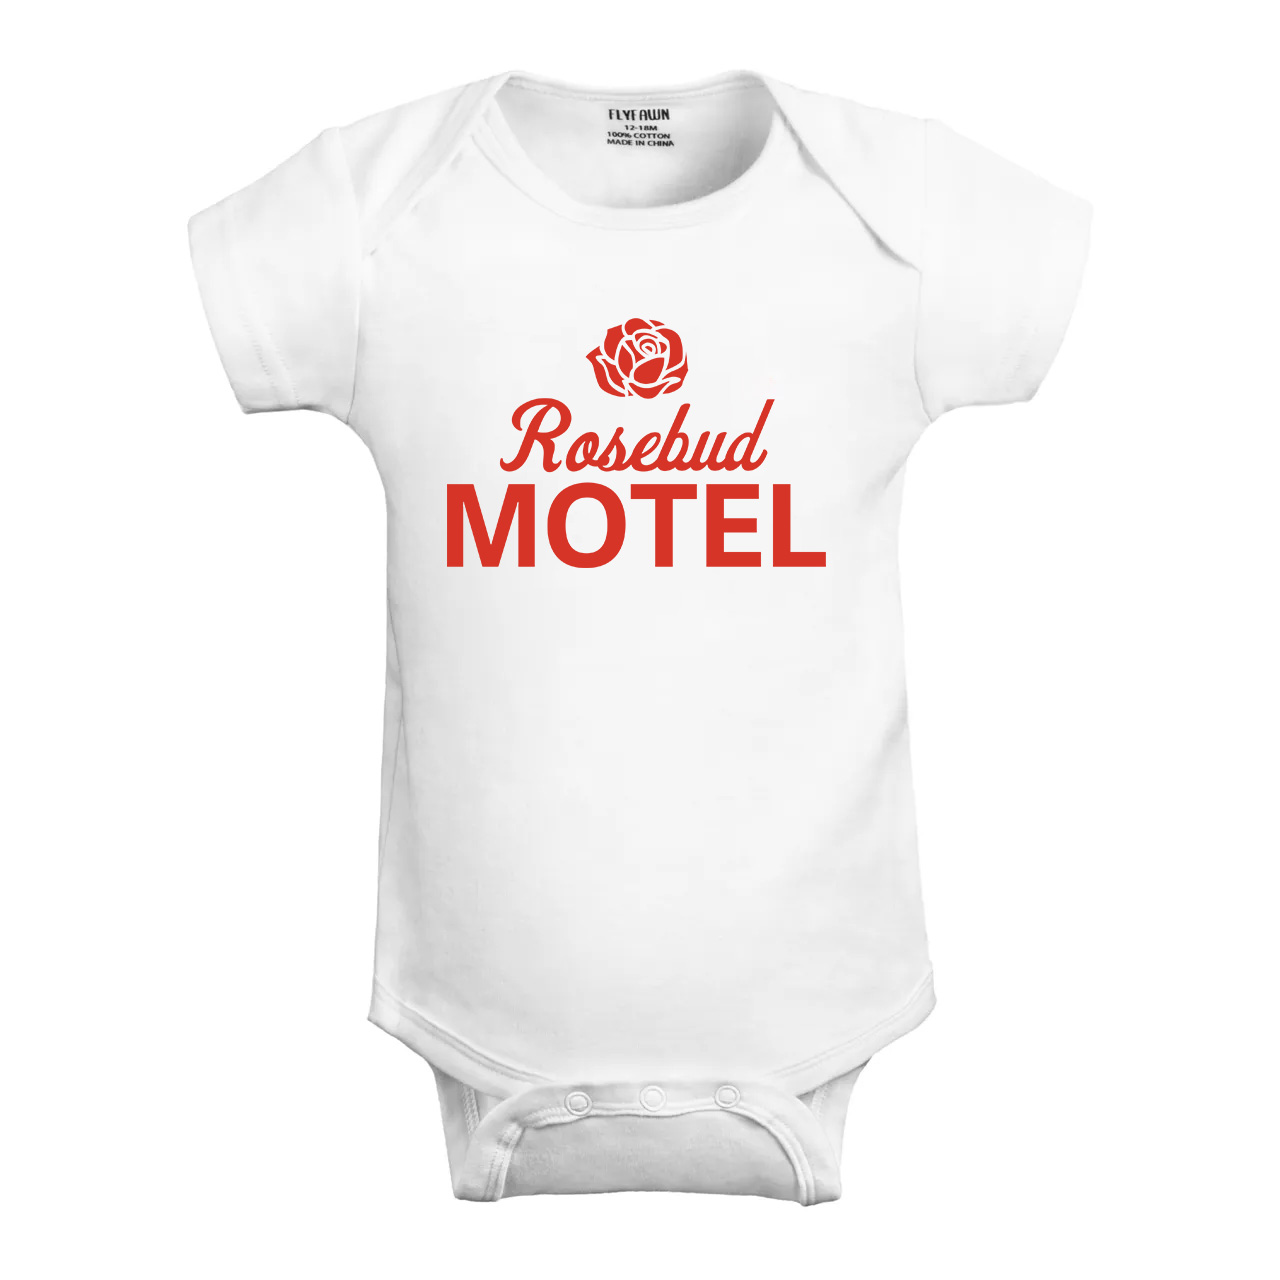 Rosebud Motel,Baby Bodysuit